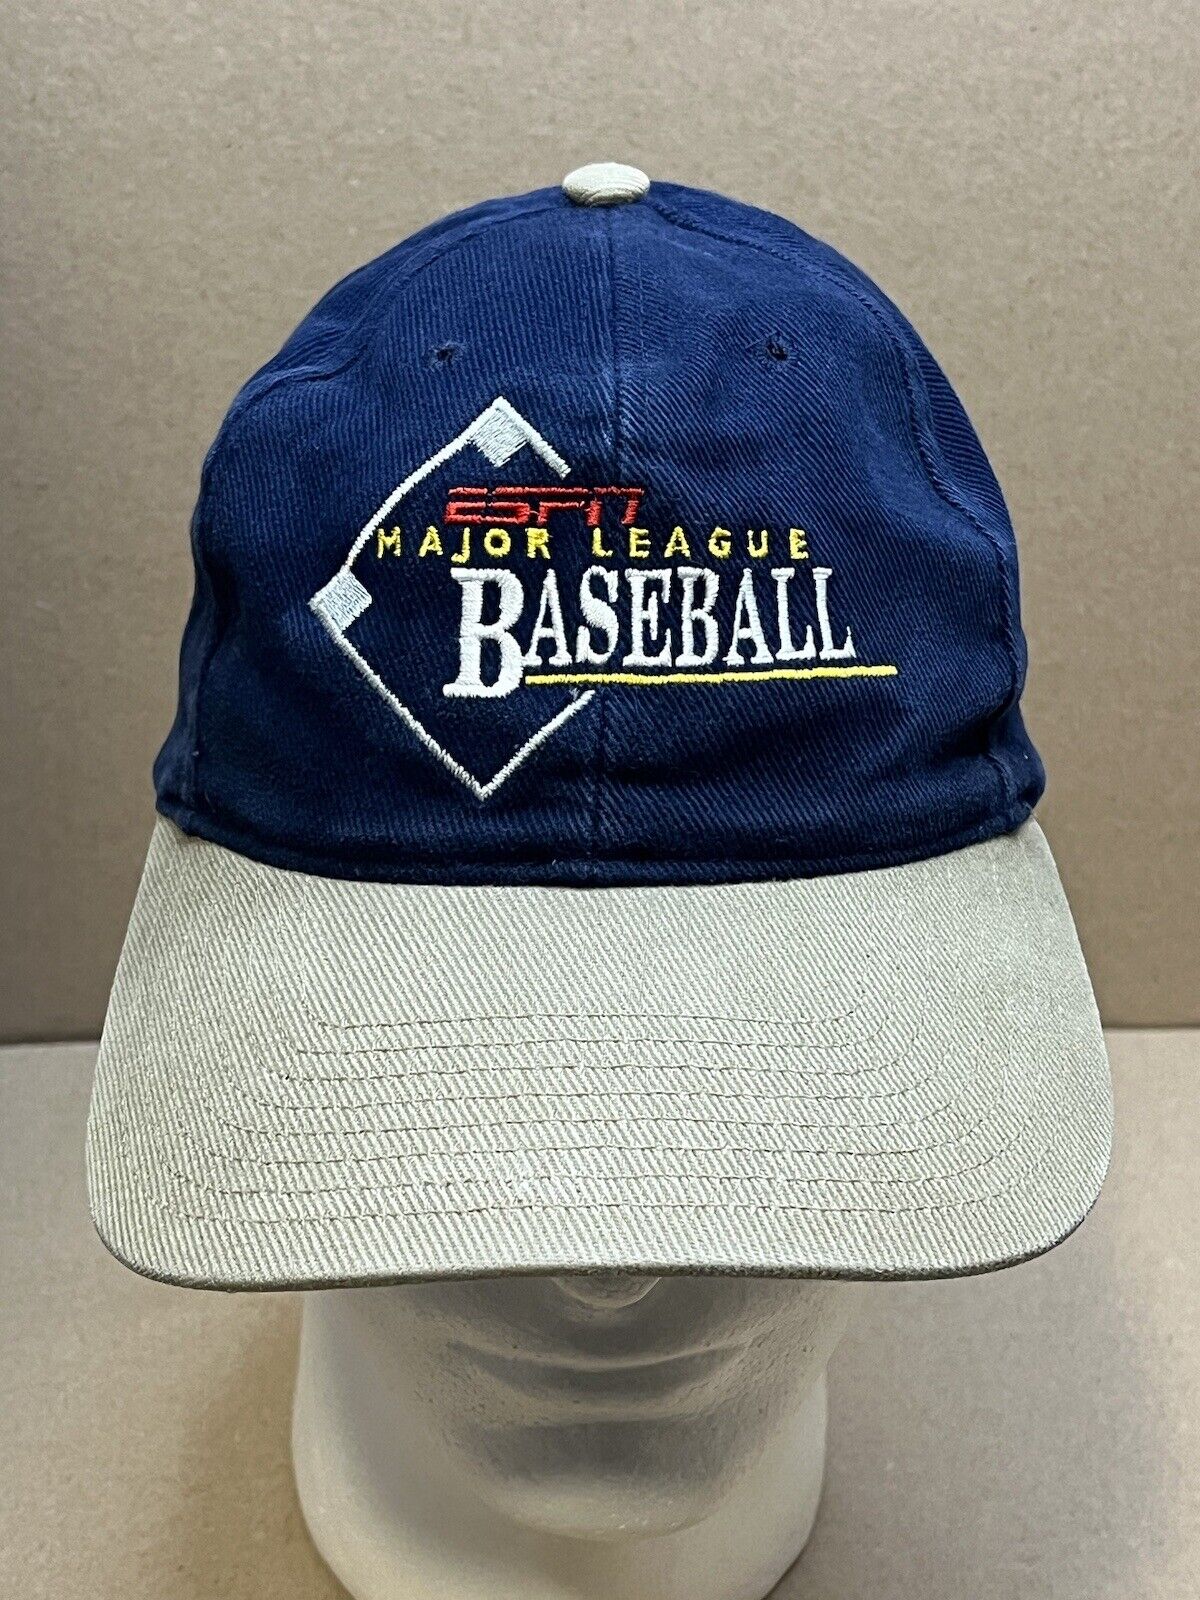 Vintage Twins Enterprise ESPN Major League Baseball Hat Adjustable Cap Navy/Tan